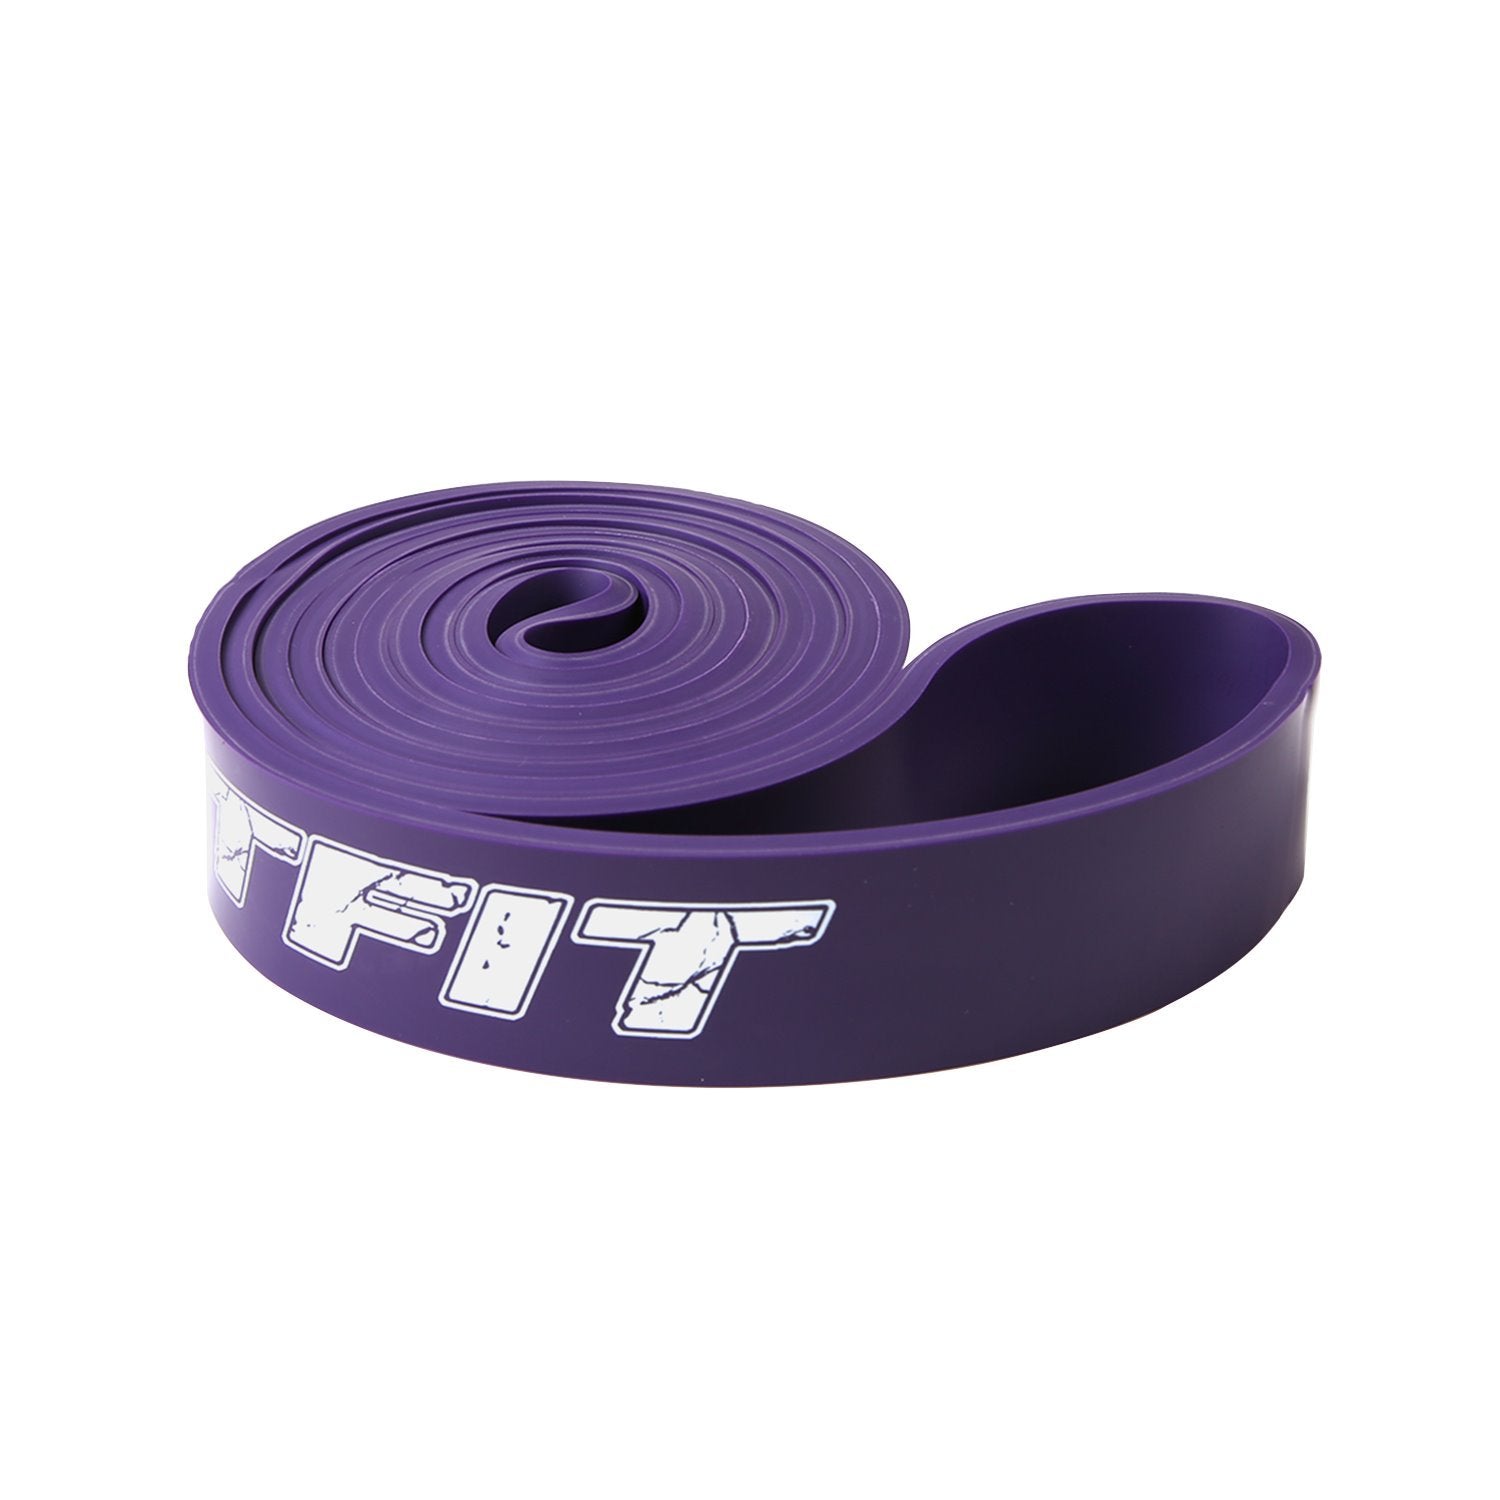 RitFit Pull Up Assist Band Set Premium Resistance Bands, Purple (40-80 lbs)